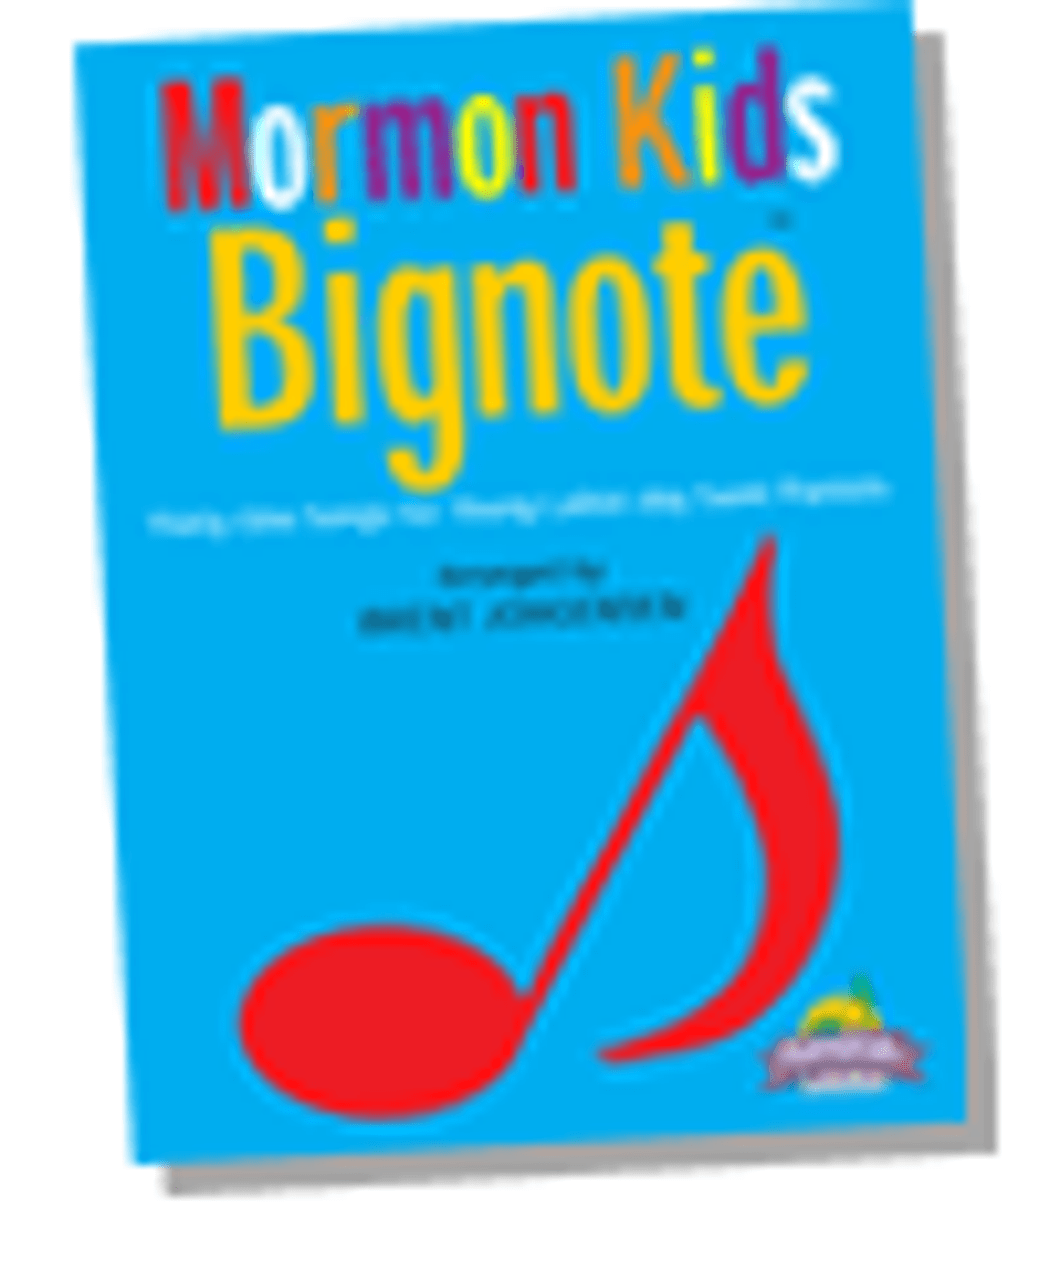 Mormon Kids Bignote *